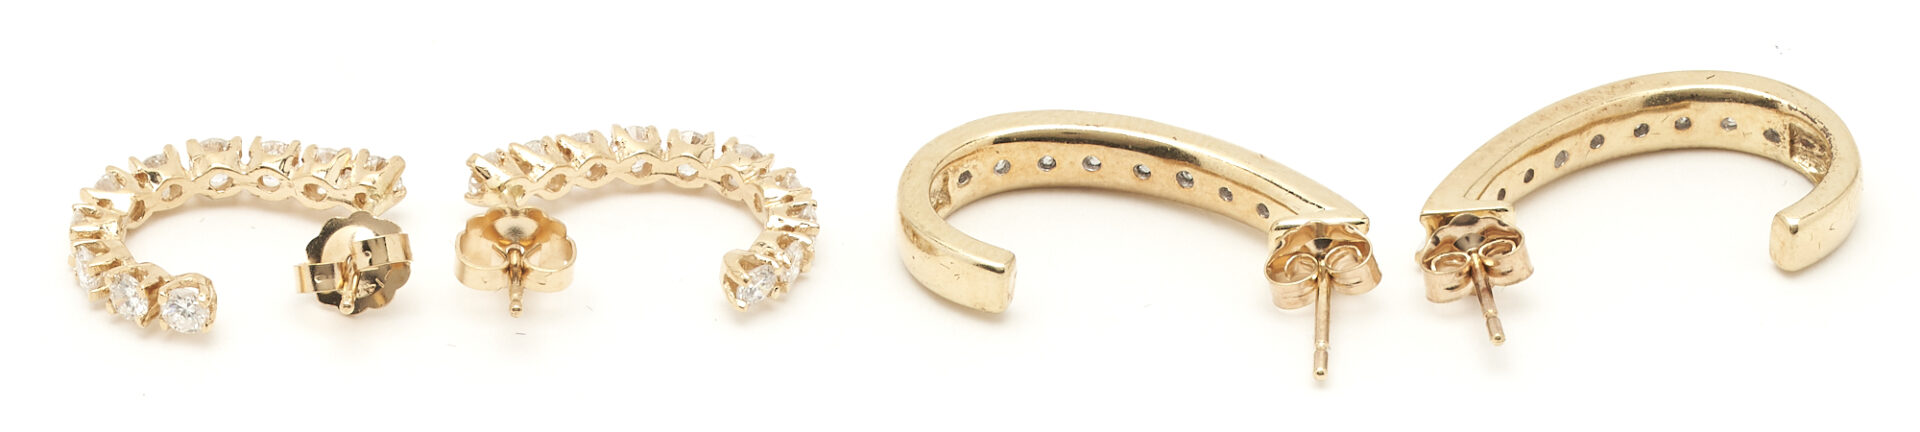 Lot 898: 4 Pairs of Gold & Diamond Earrings